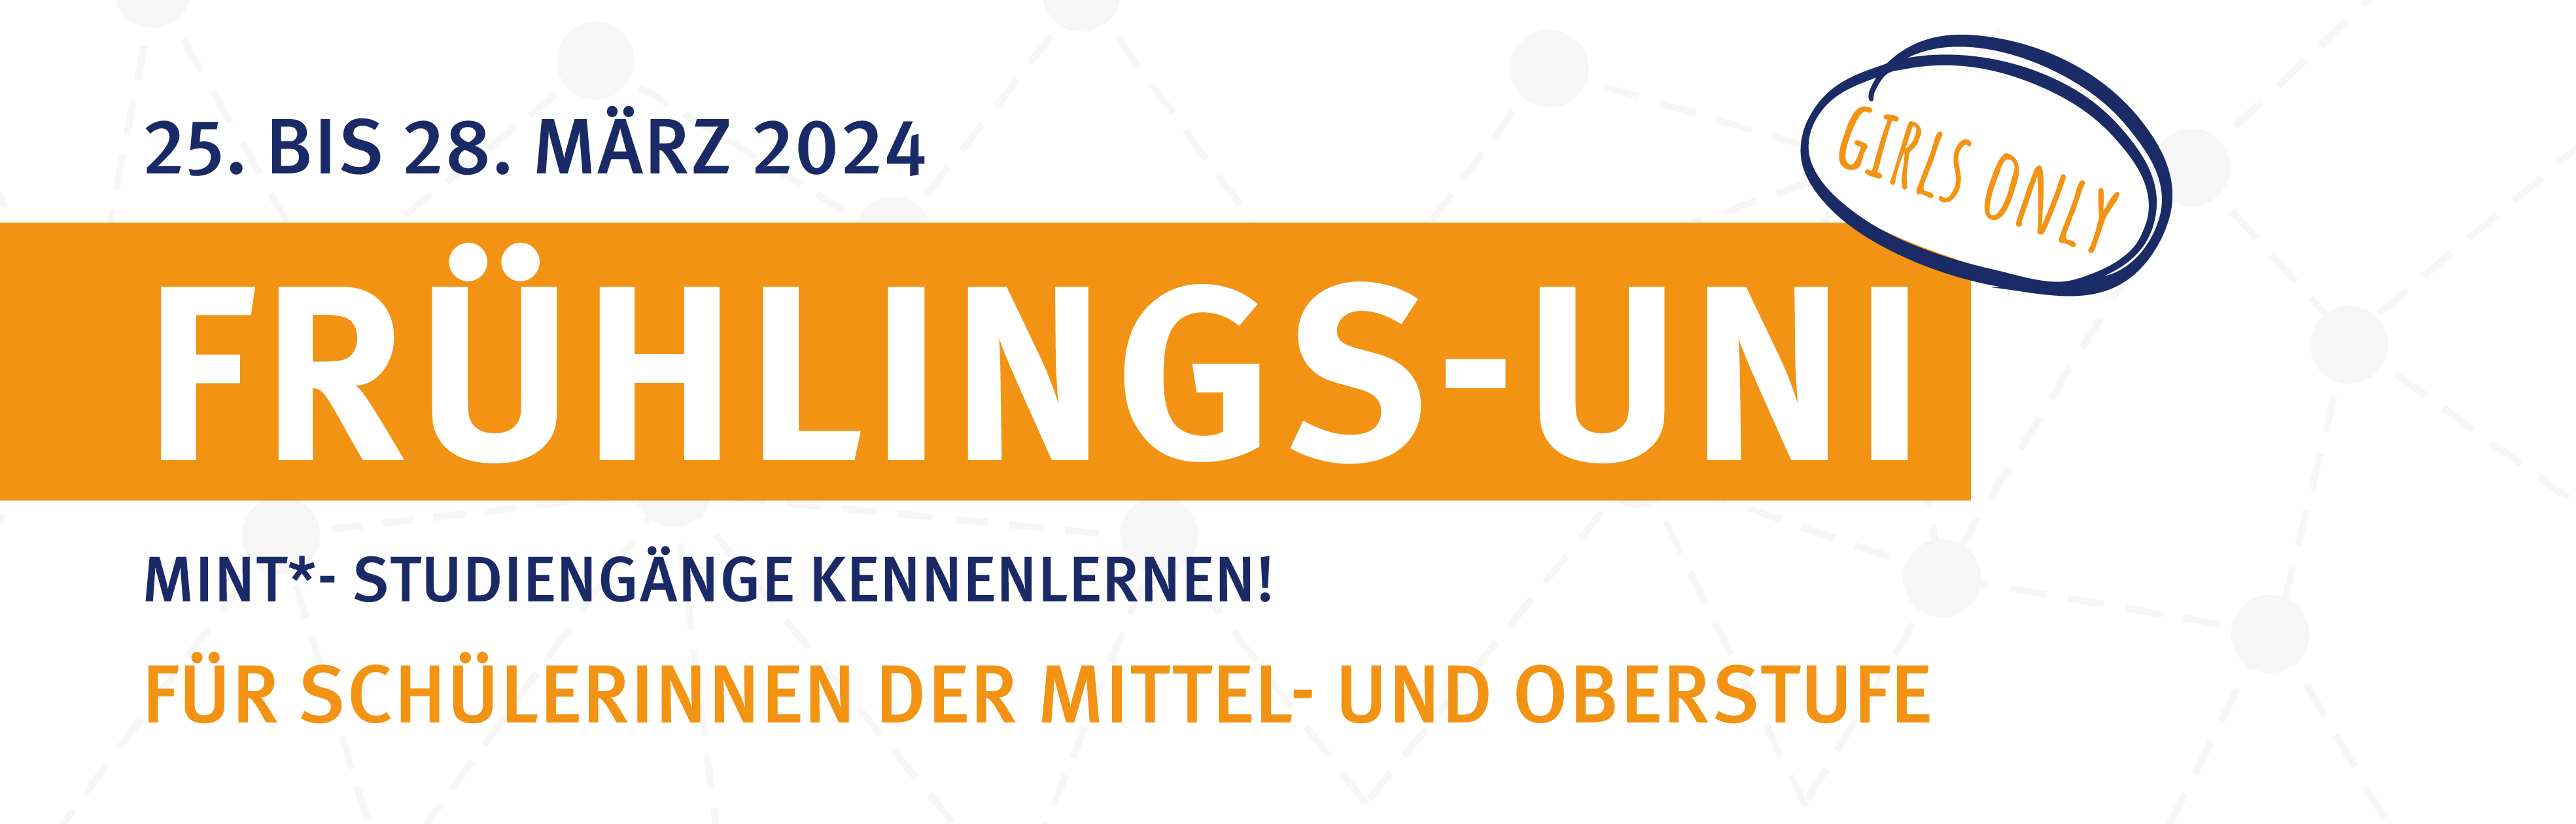 Anmeldung Frühlings-Uni 2024 "girls only"